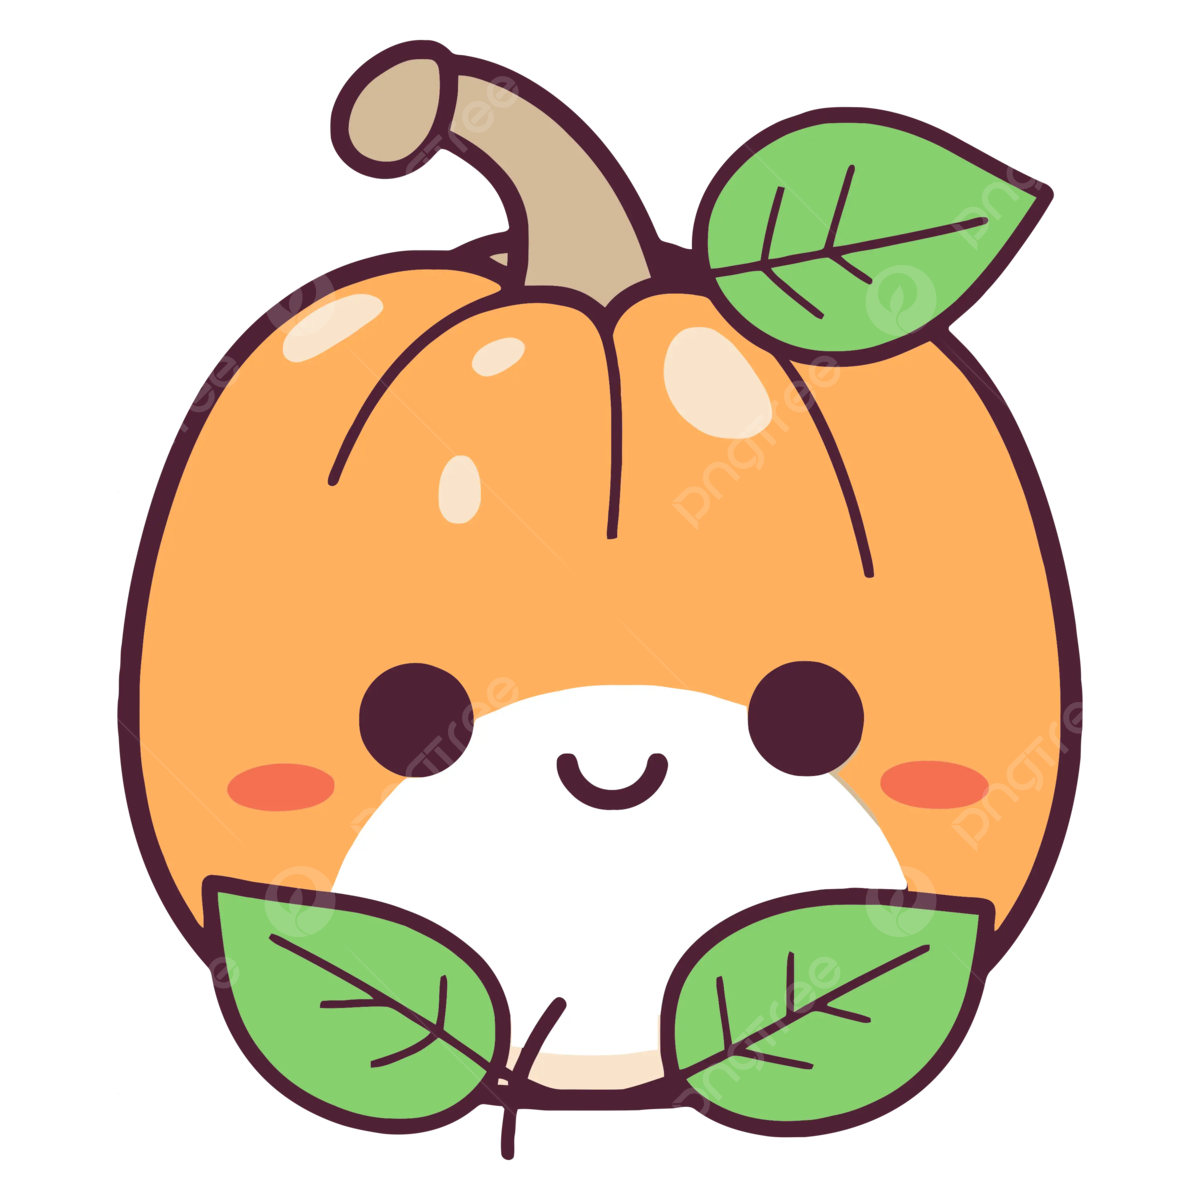 Cute Pumpkin PNG Image HD